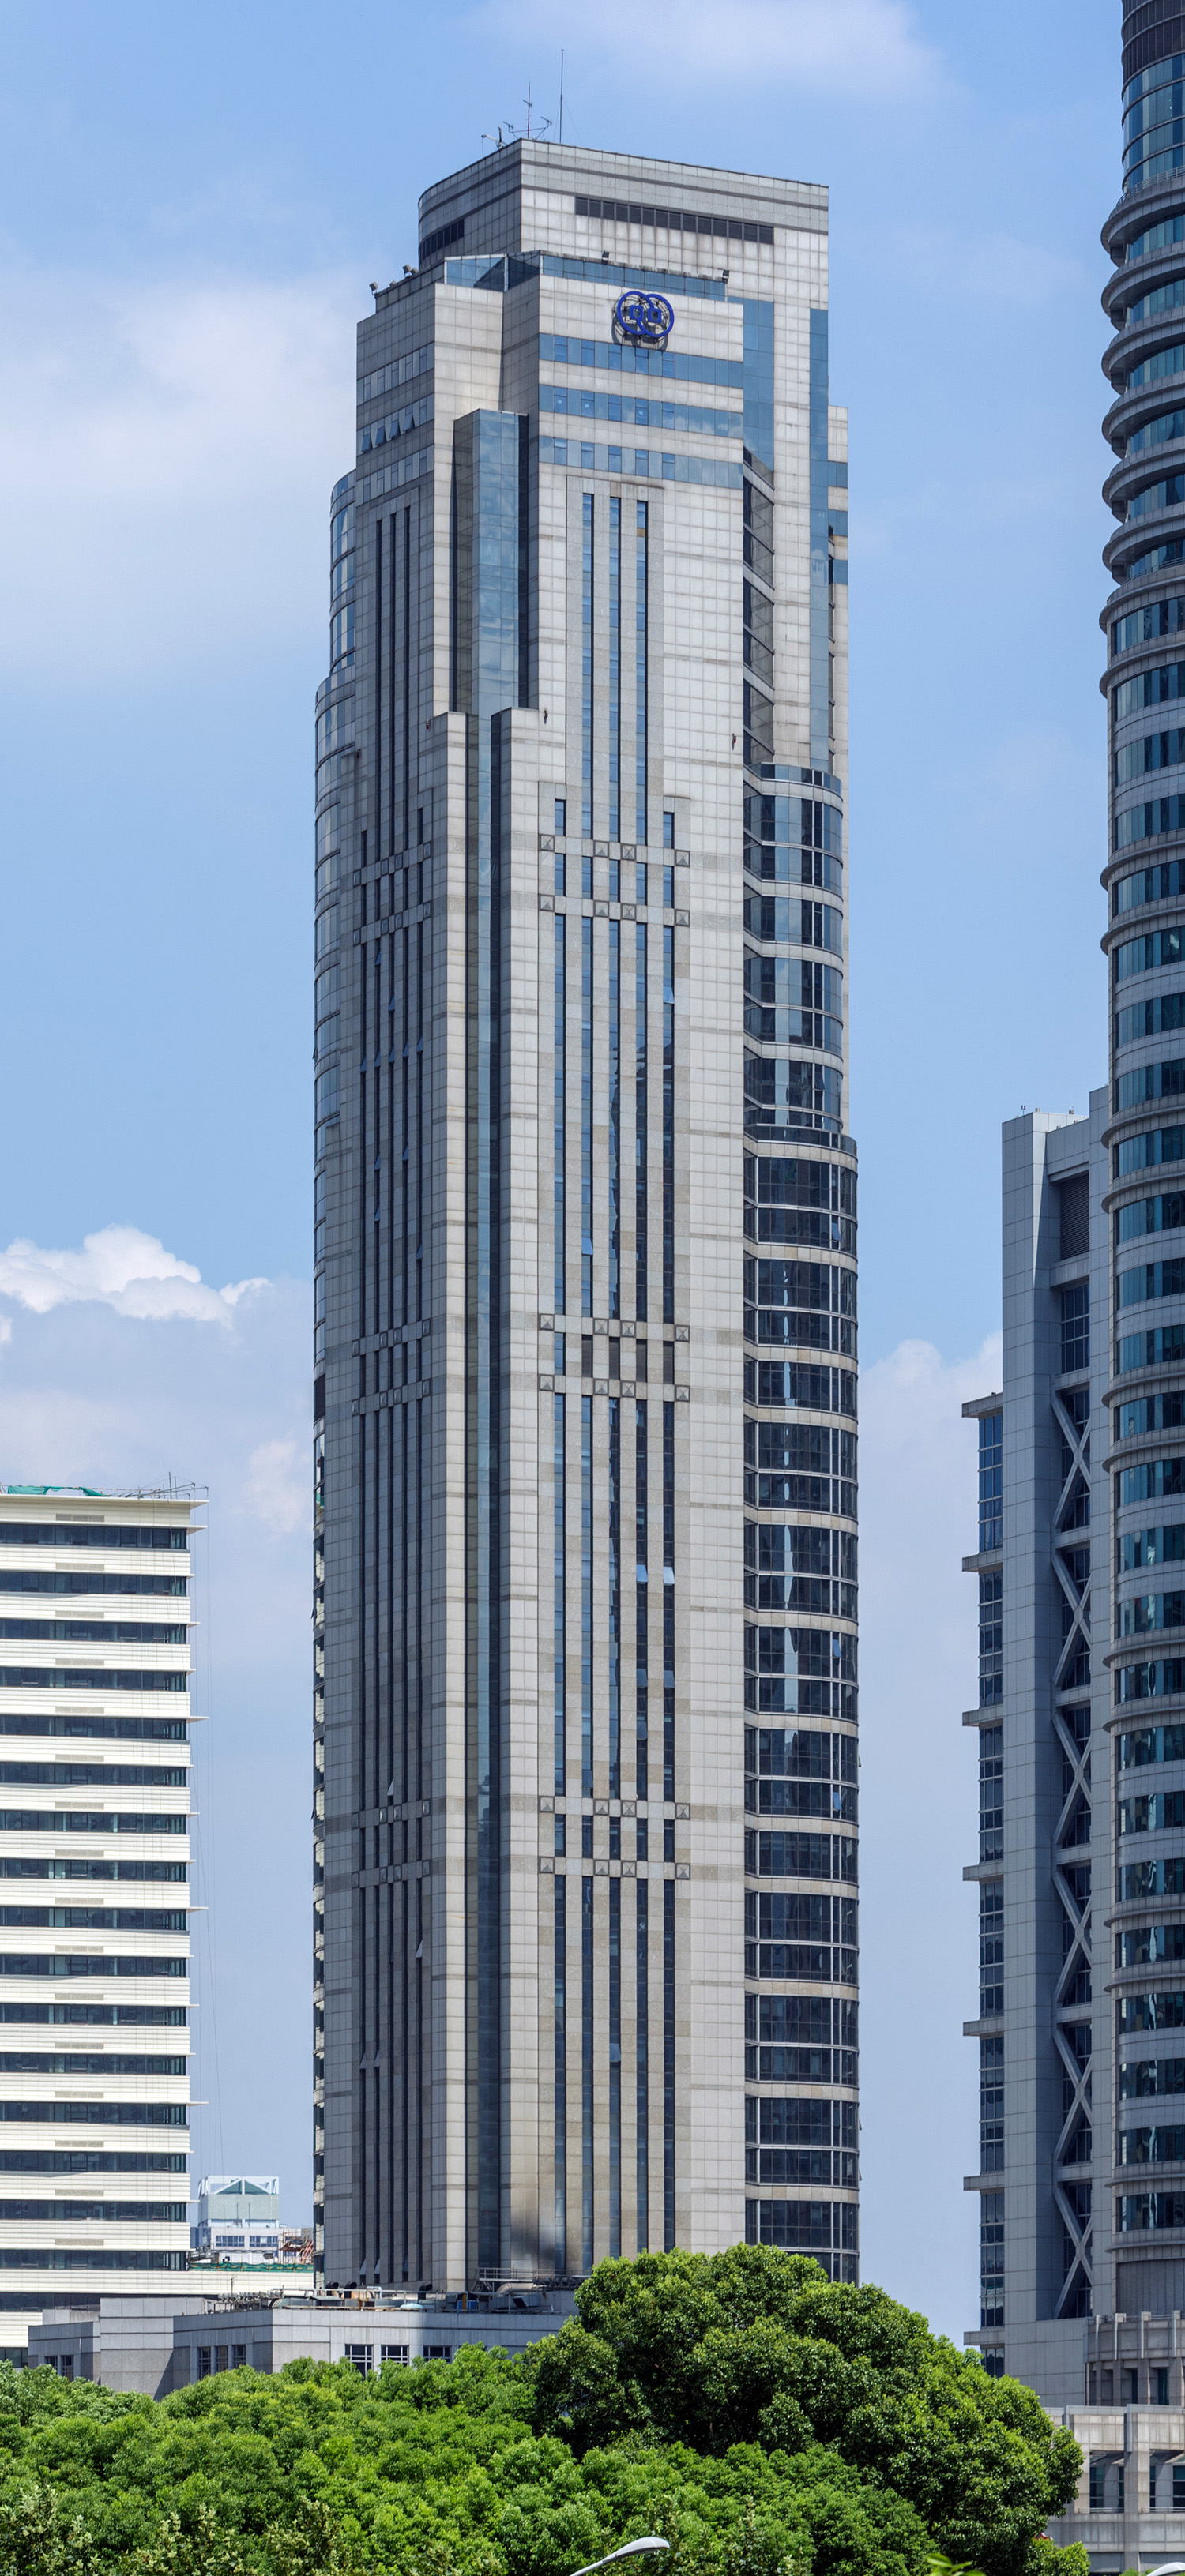 Shanghai Development Bank Tower, Shanghai - View from the southwest. © Mathias Beinling